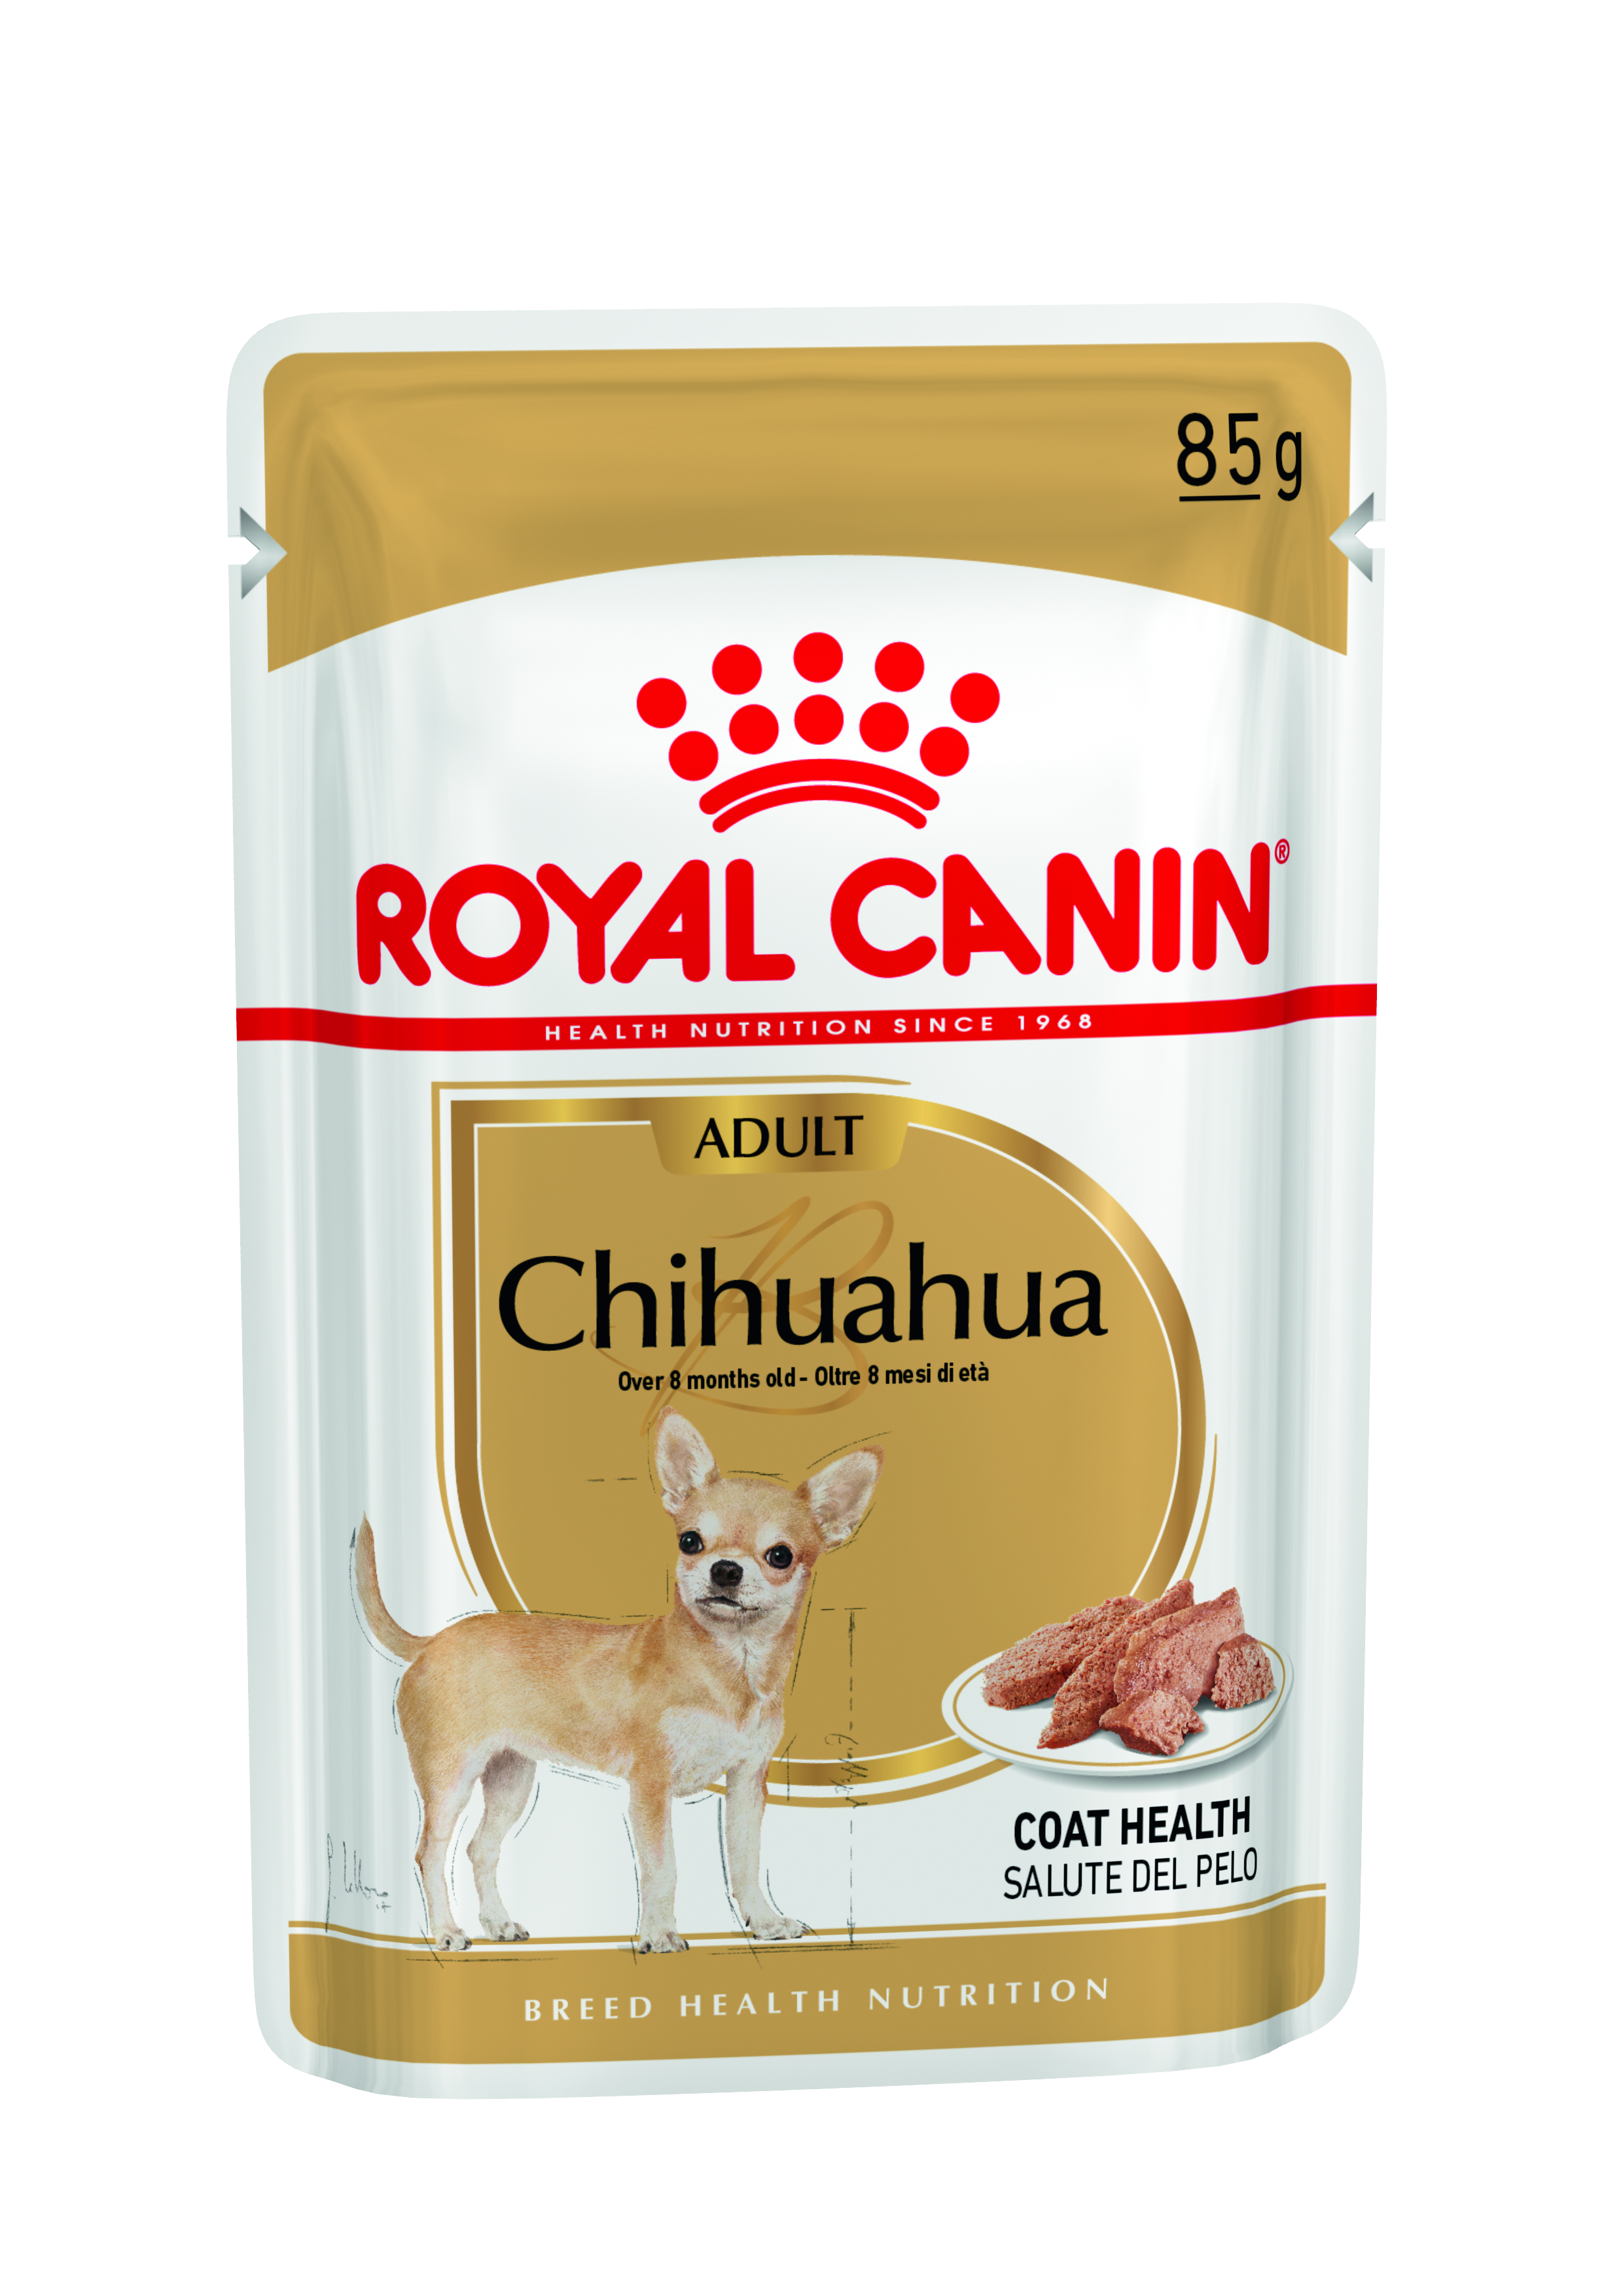 royal canin chihuahua puppy